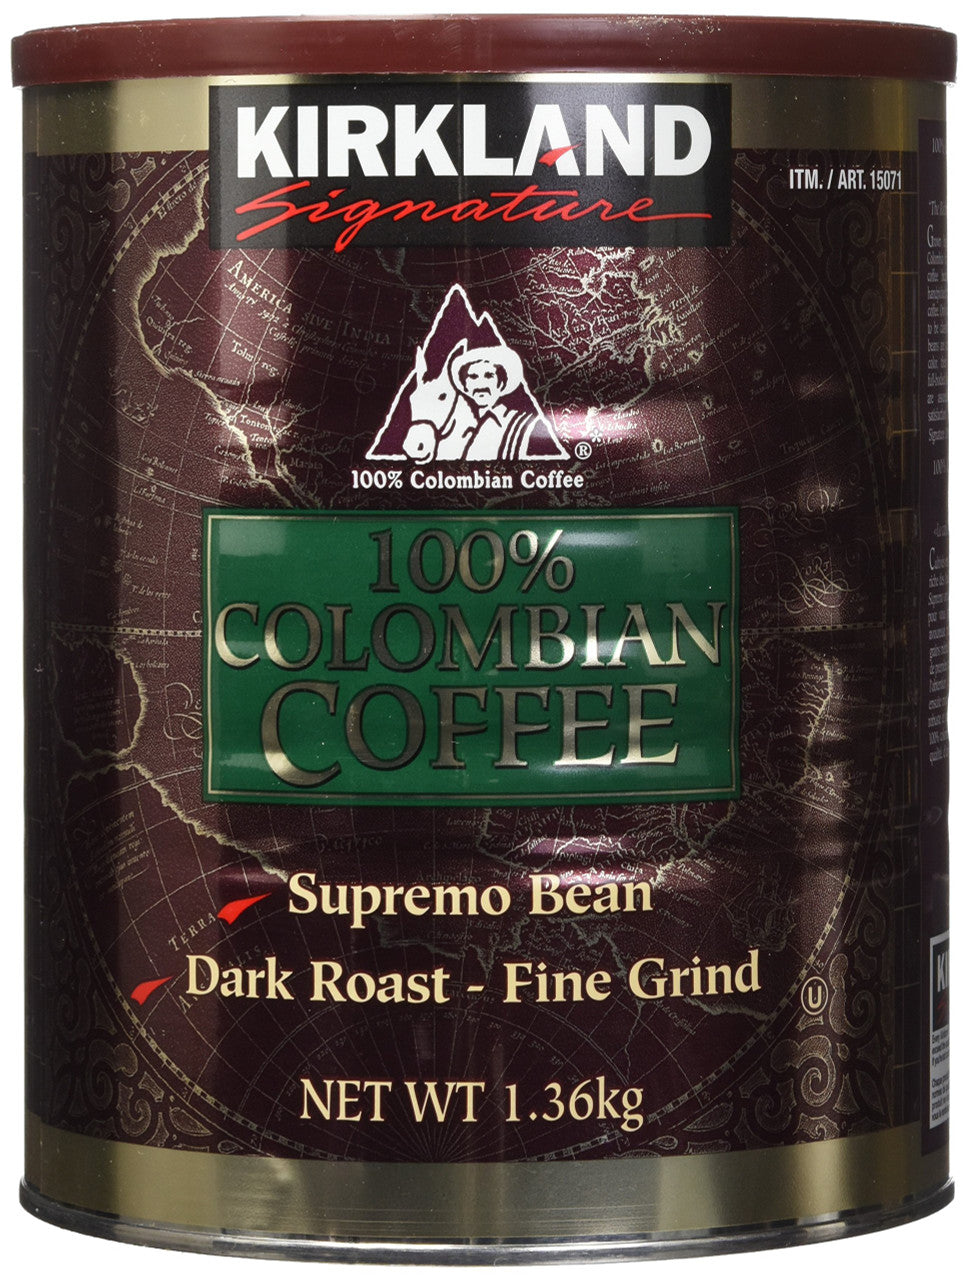 Kirkland Signature Supremo Bean Ground Coffee, 1.36kg/3lbs